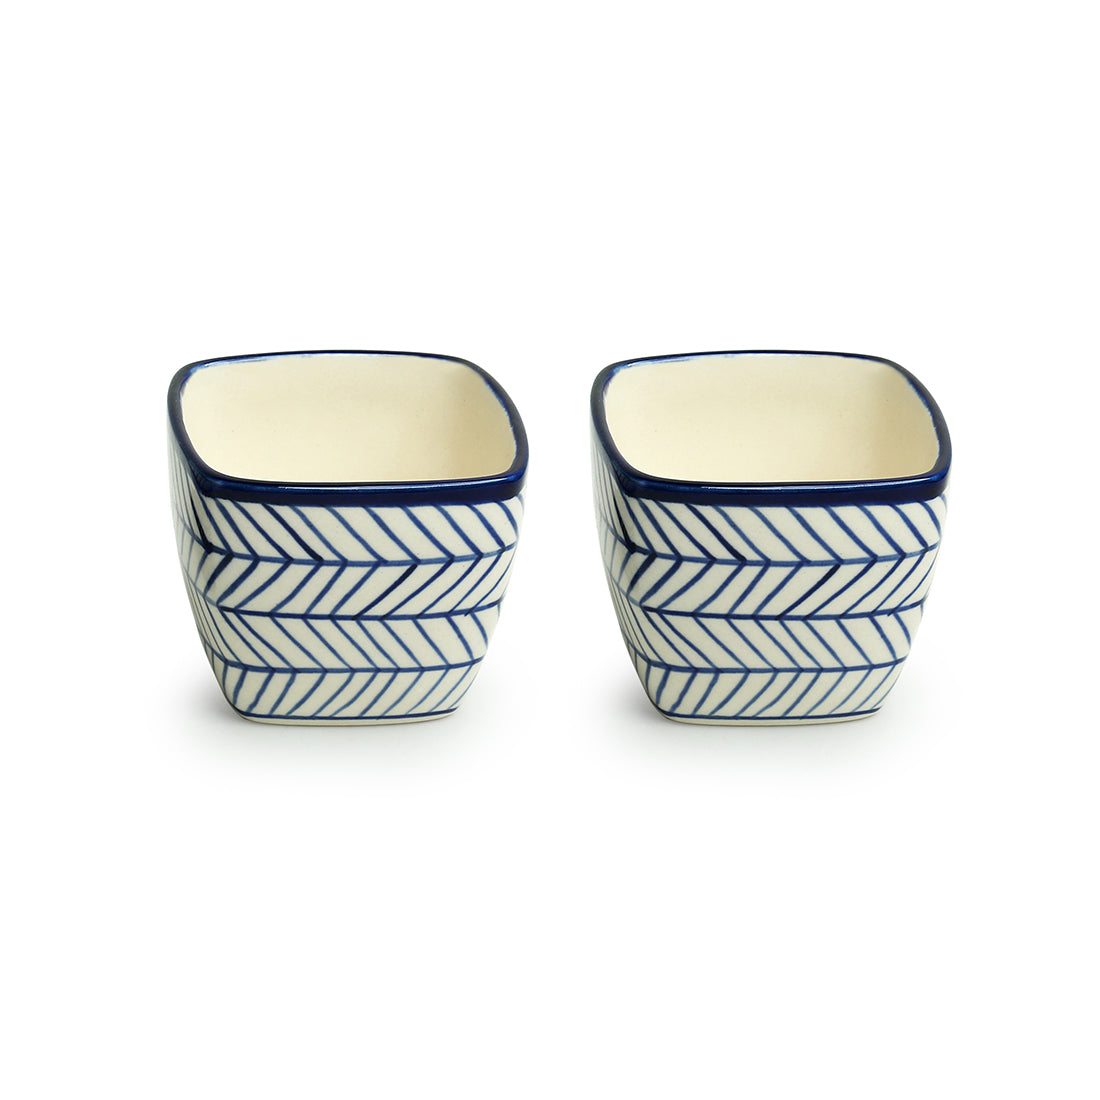 'Indigo Chevron Duo' Handpainted Ceramic Cuboidal Table Planter Pots (3.7 Inch, Set of 2)of 2)